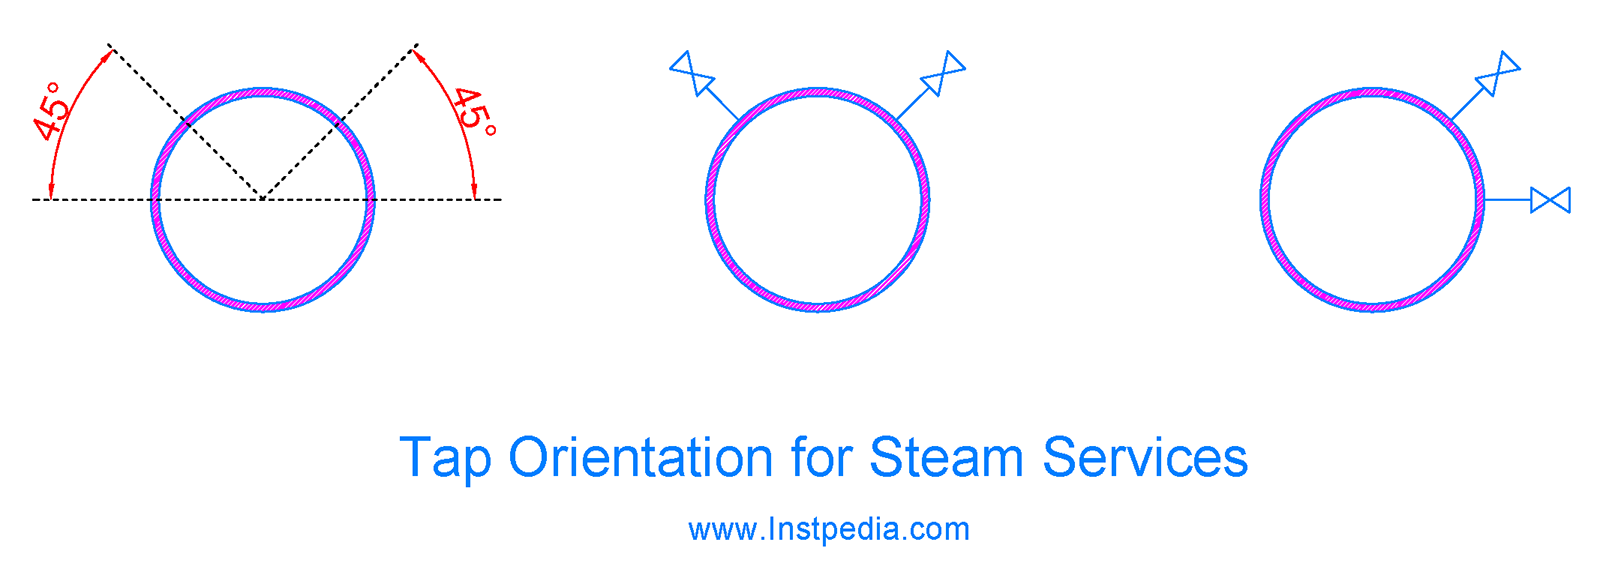 Tap Orientation for Steam